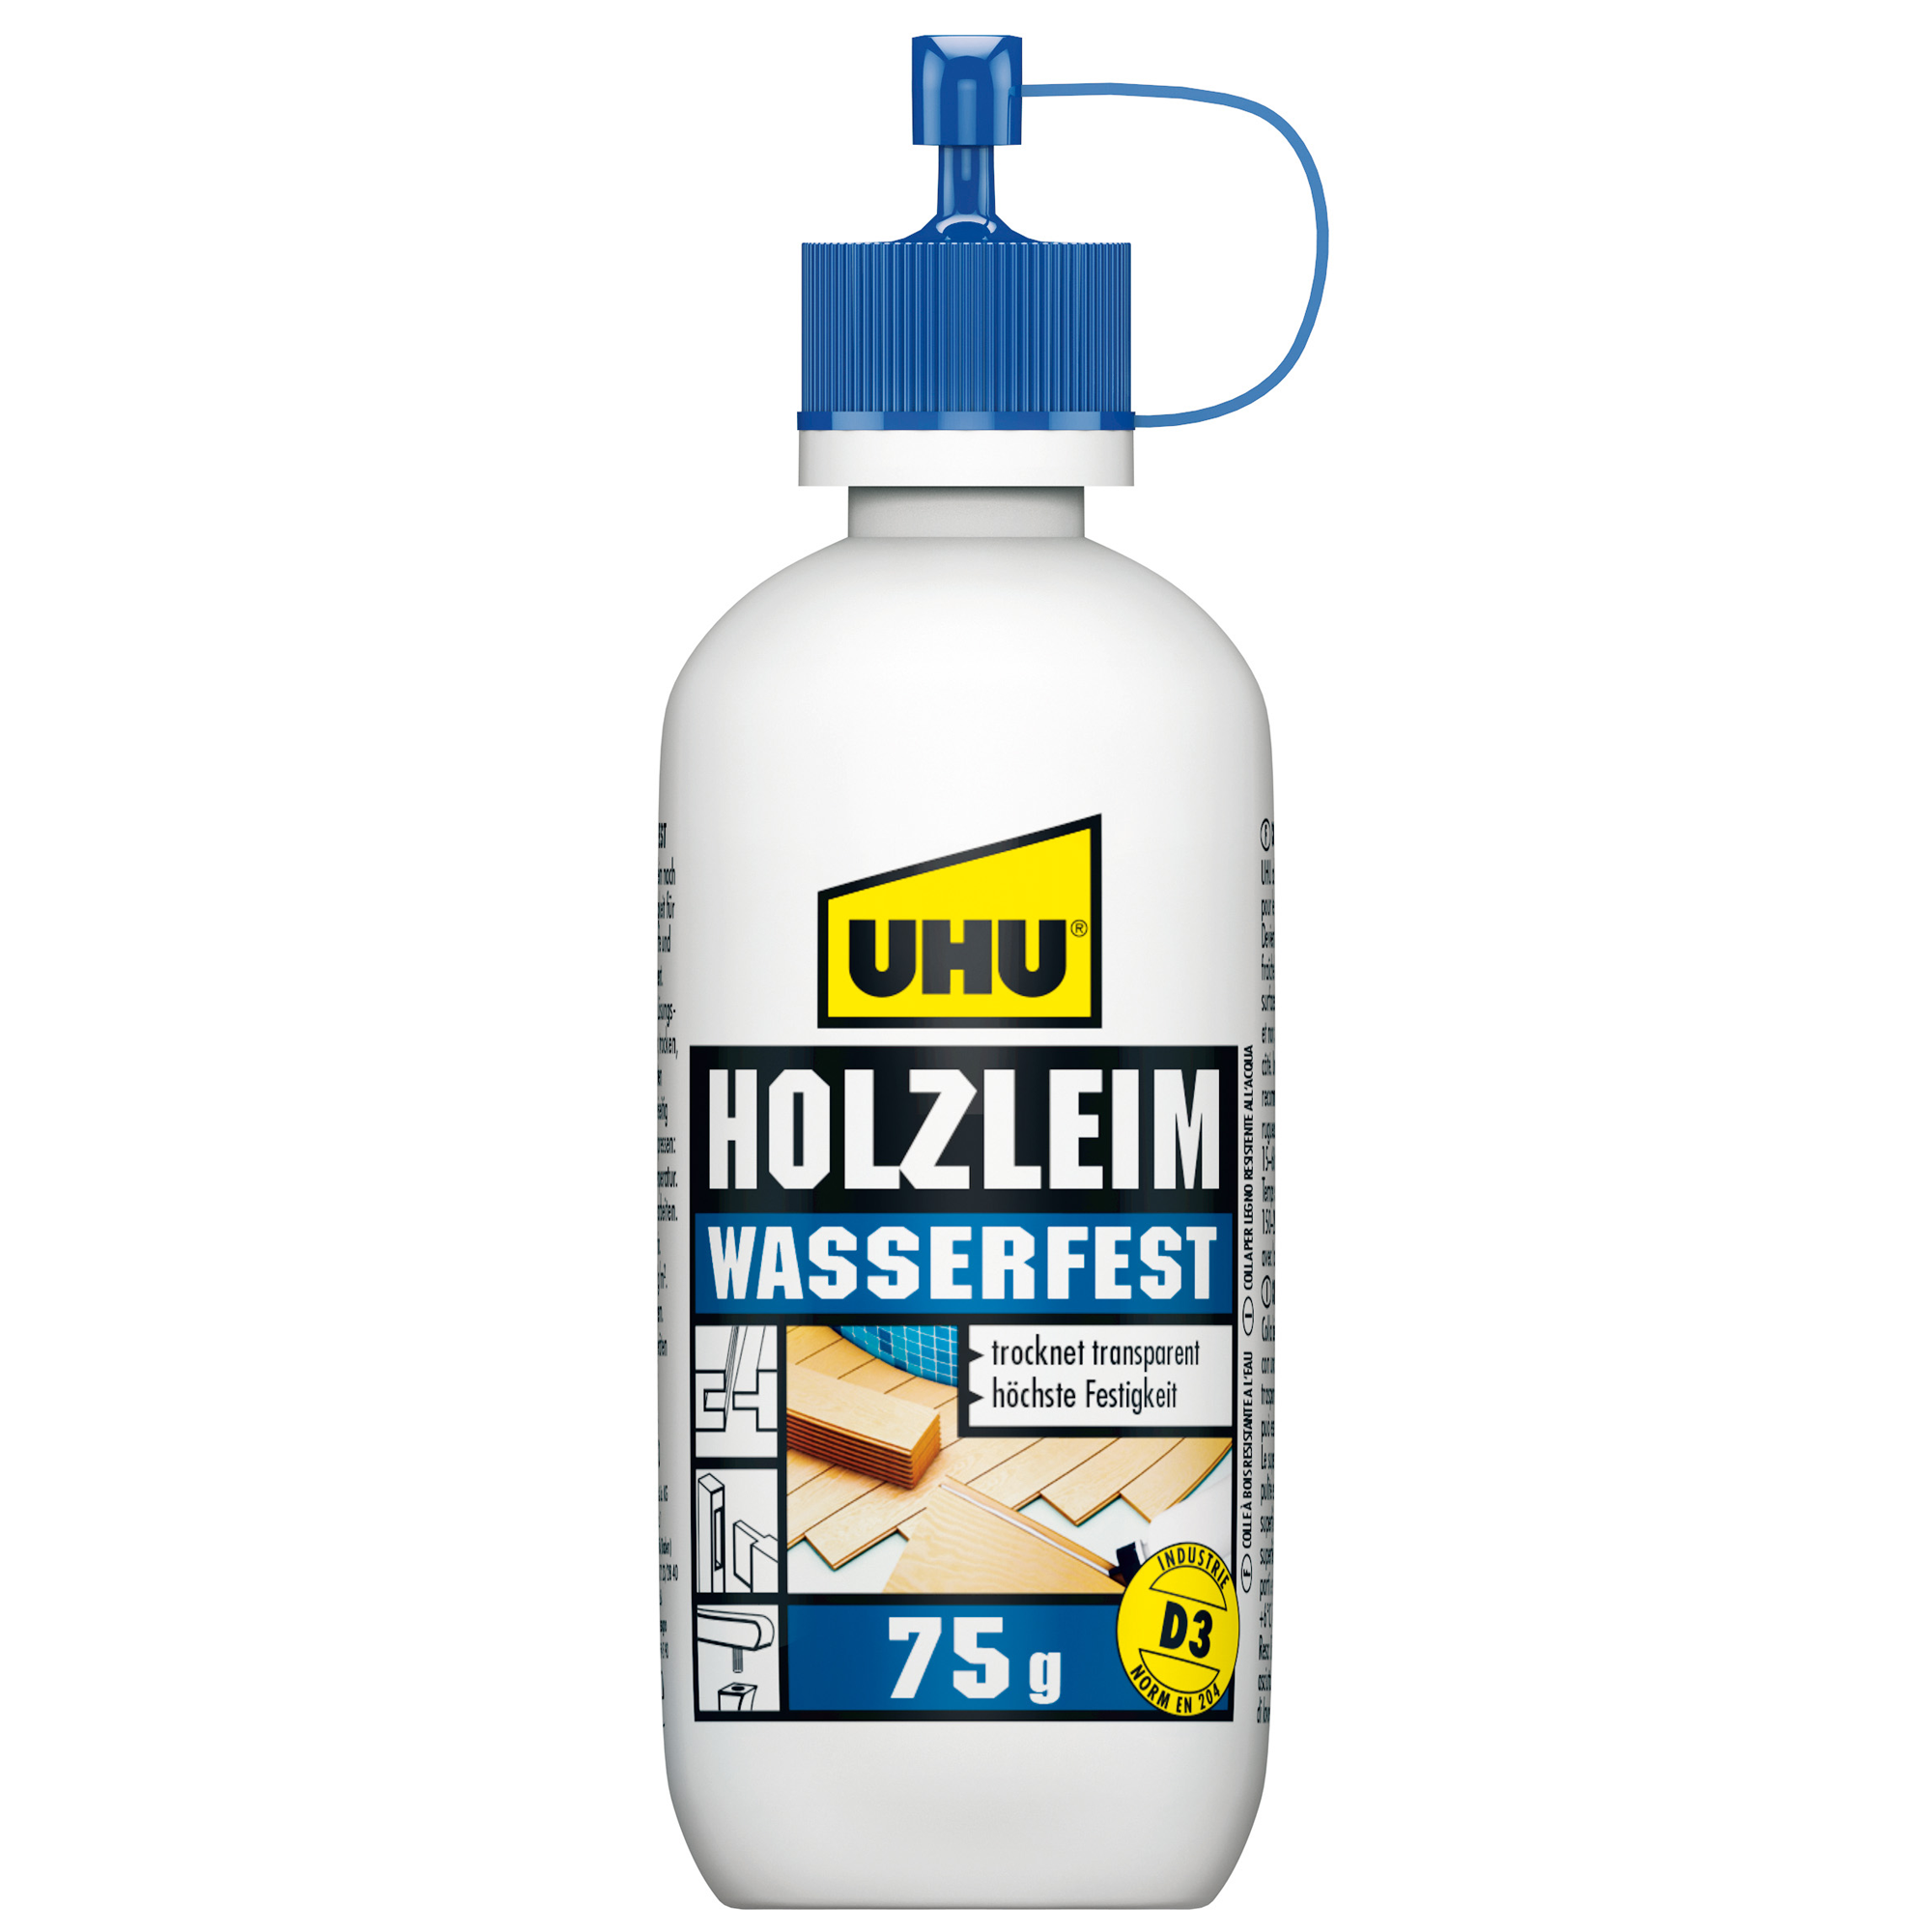 Holzleim 'Wasserfest' 75 g + product picture